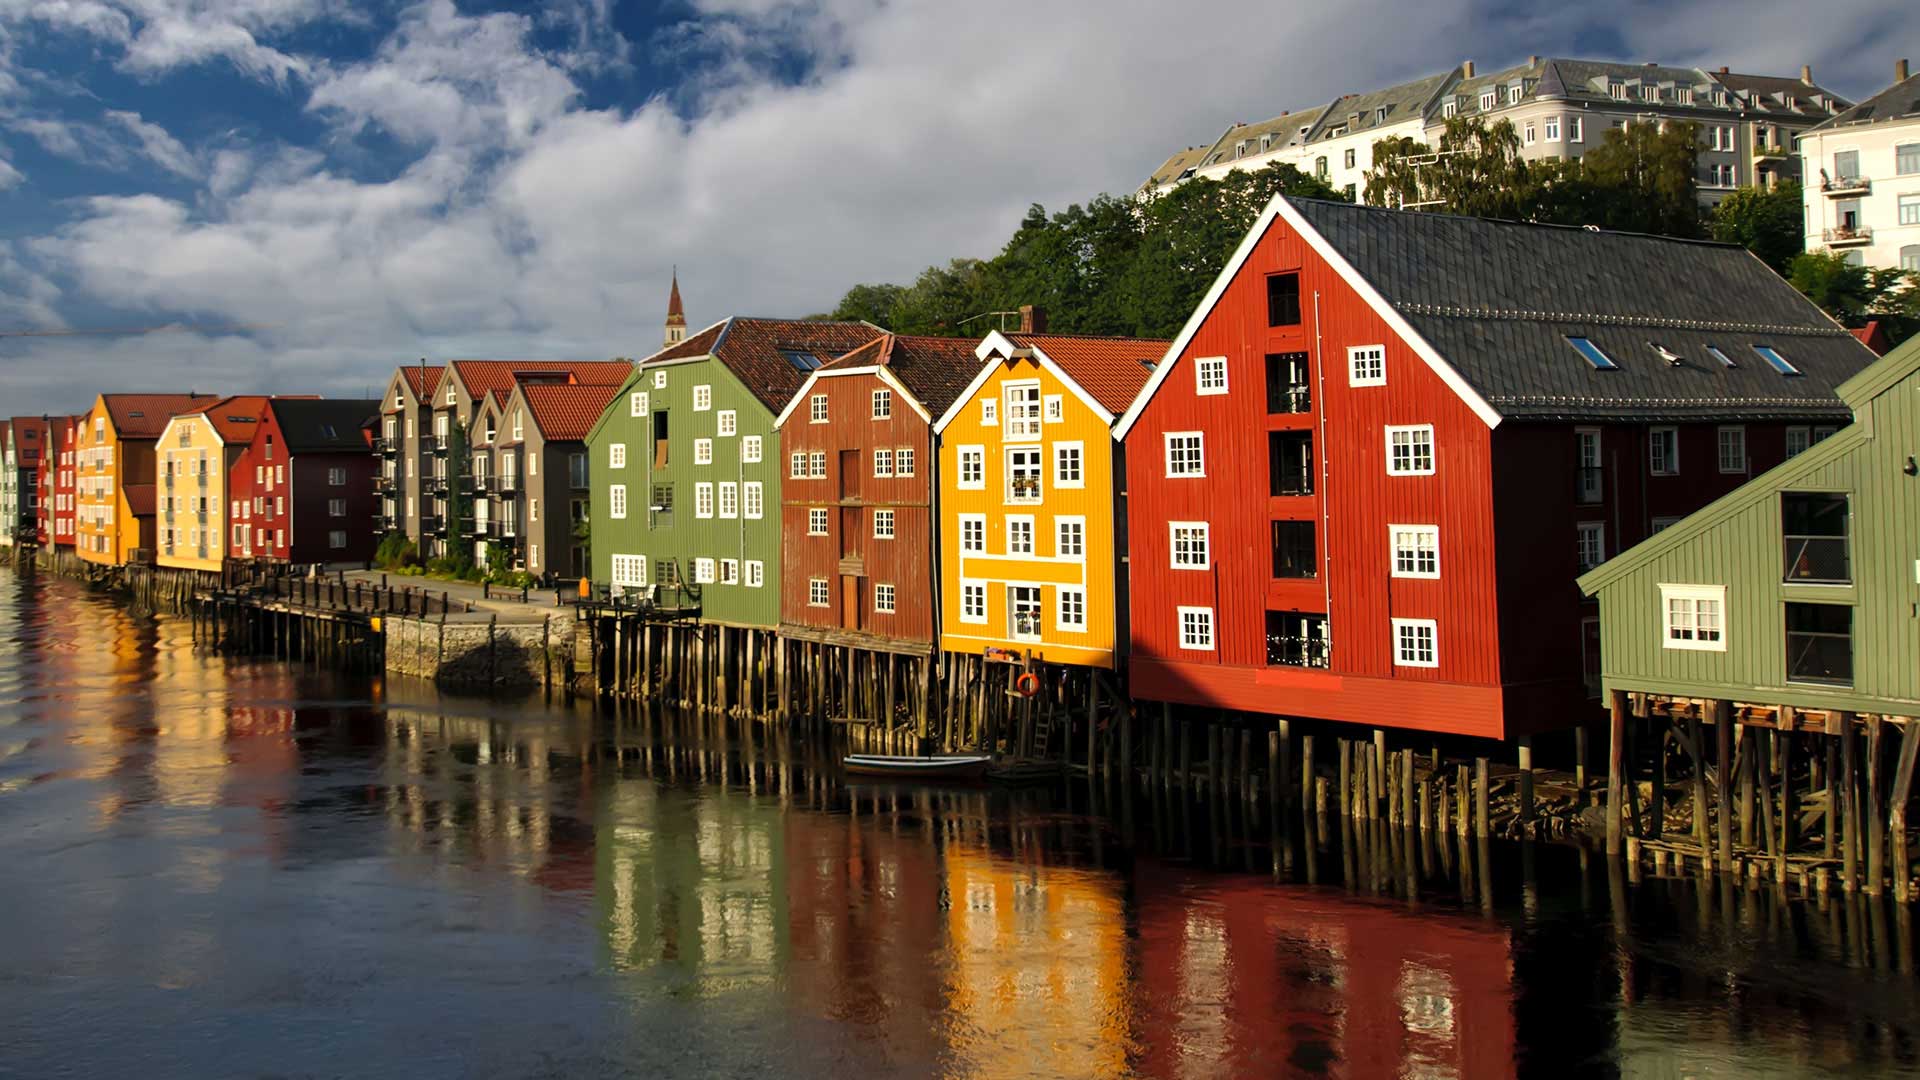 Trondheim wooden houses on stilts